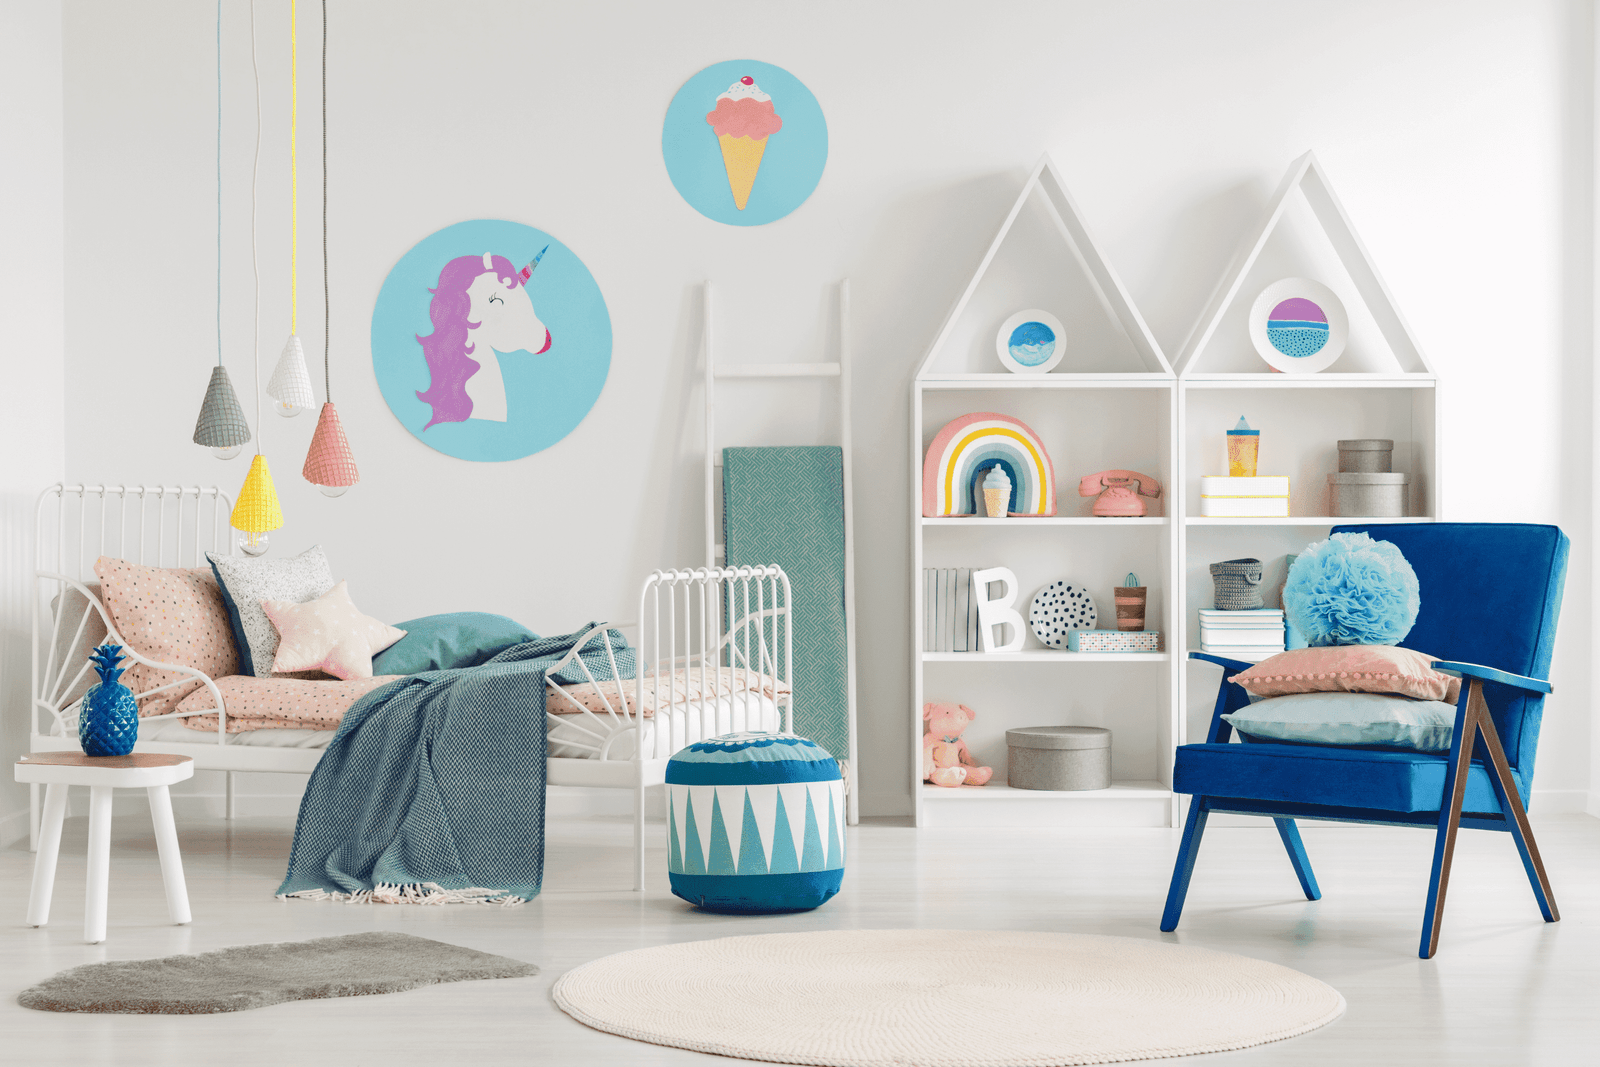 Kids bedroom Design Image